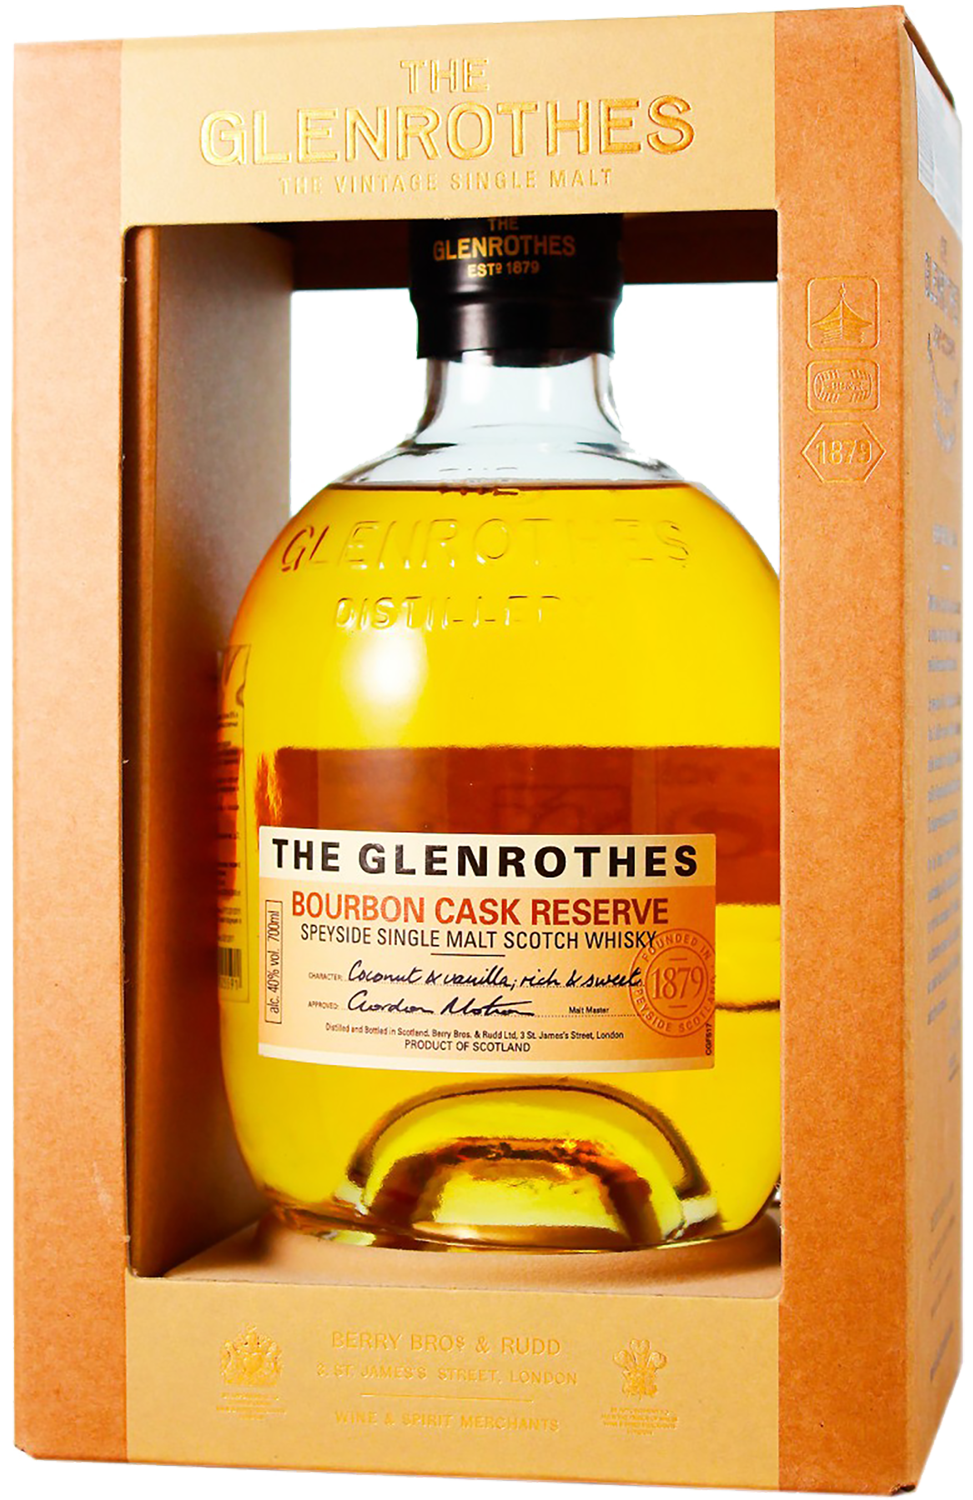 The Glenrothes Bourbon Cask Reserve Speyside Single Malt Scotch Whisky (gift box) game of thrones house tyrell clynelish reserve single malt scotch whisky gift box